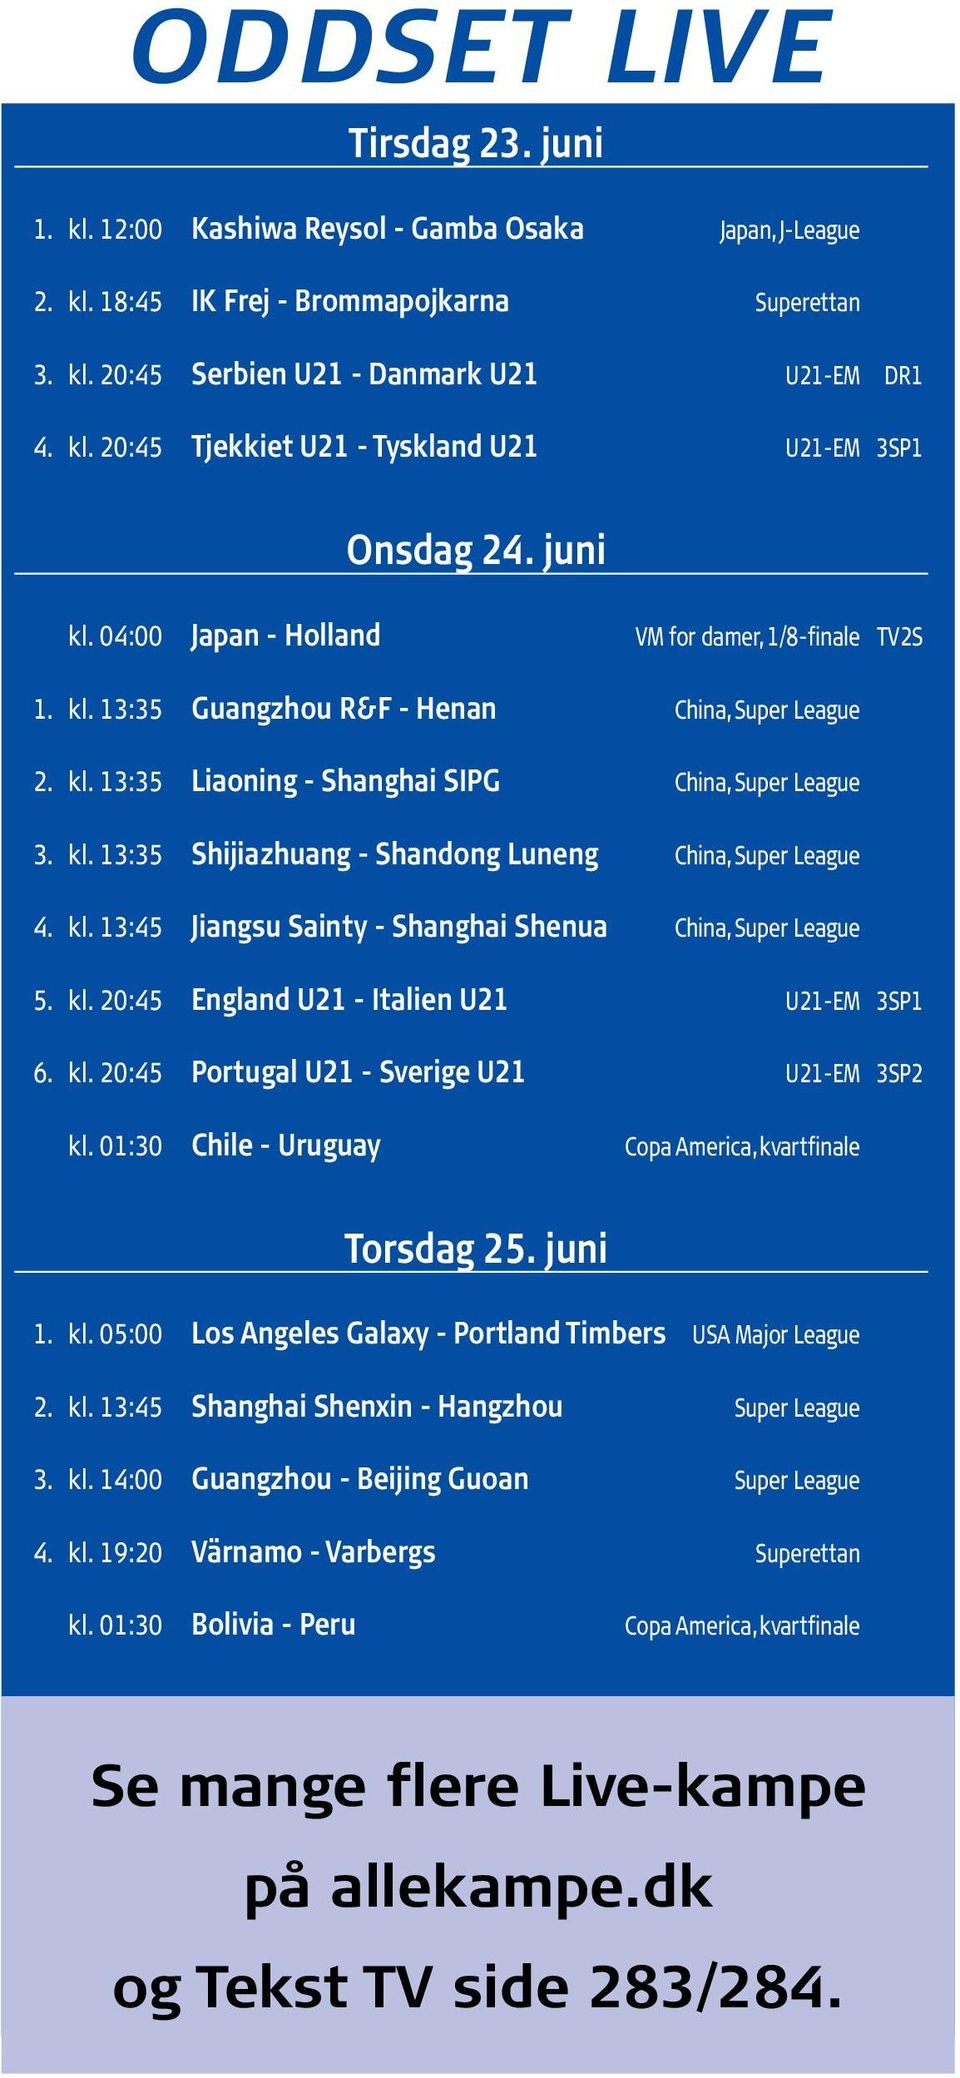 kl. 13:45 Jiangsu Sainty Shanghai Shenua China, Super League 5. kl. 20:45 England U21 Italien U21 U21EM 3SP1 6. kl. 20:45 Portugal U21 Sverige U21 U21EM 3SP2 kl.